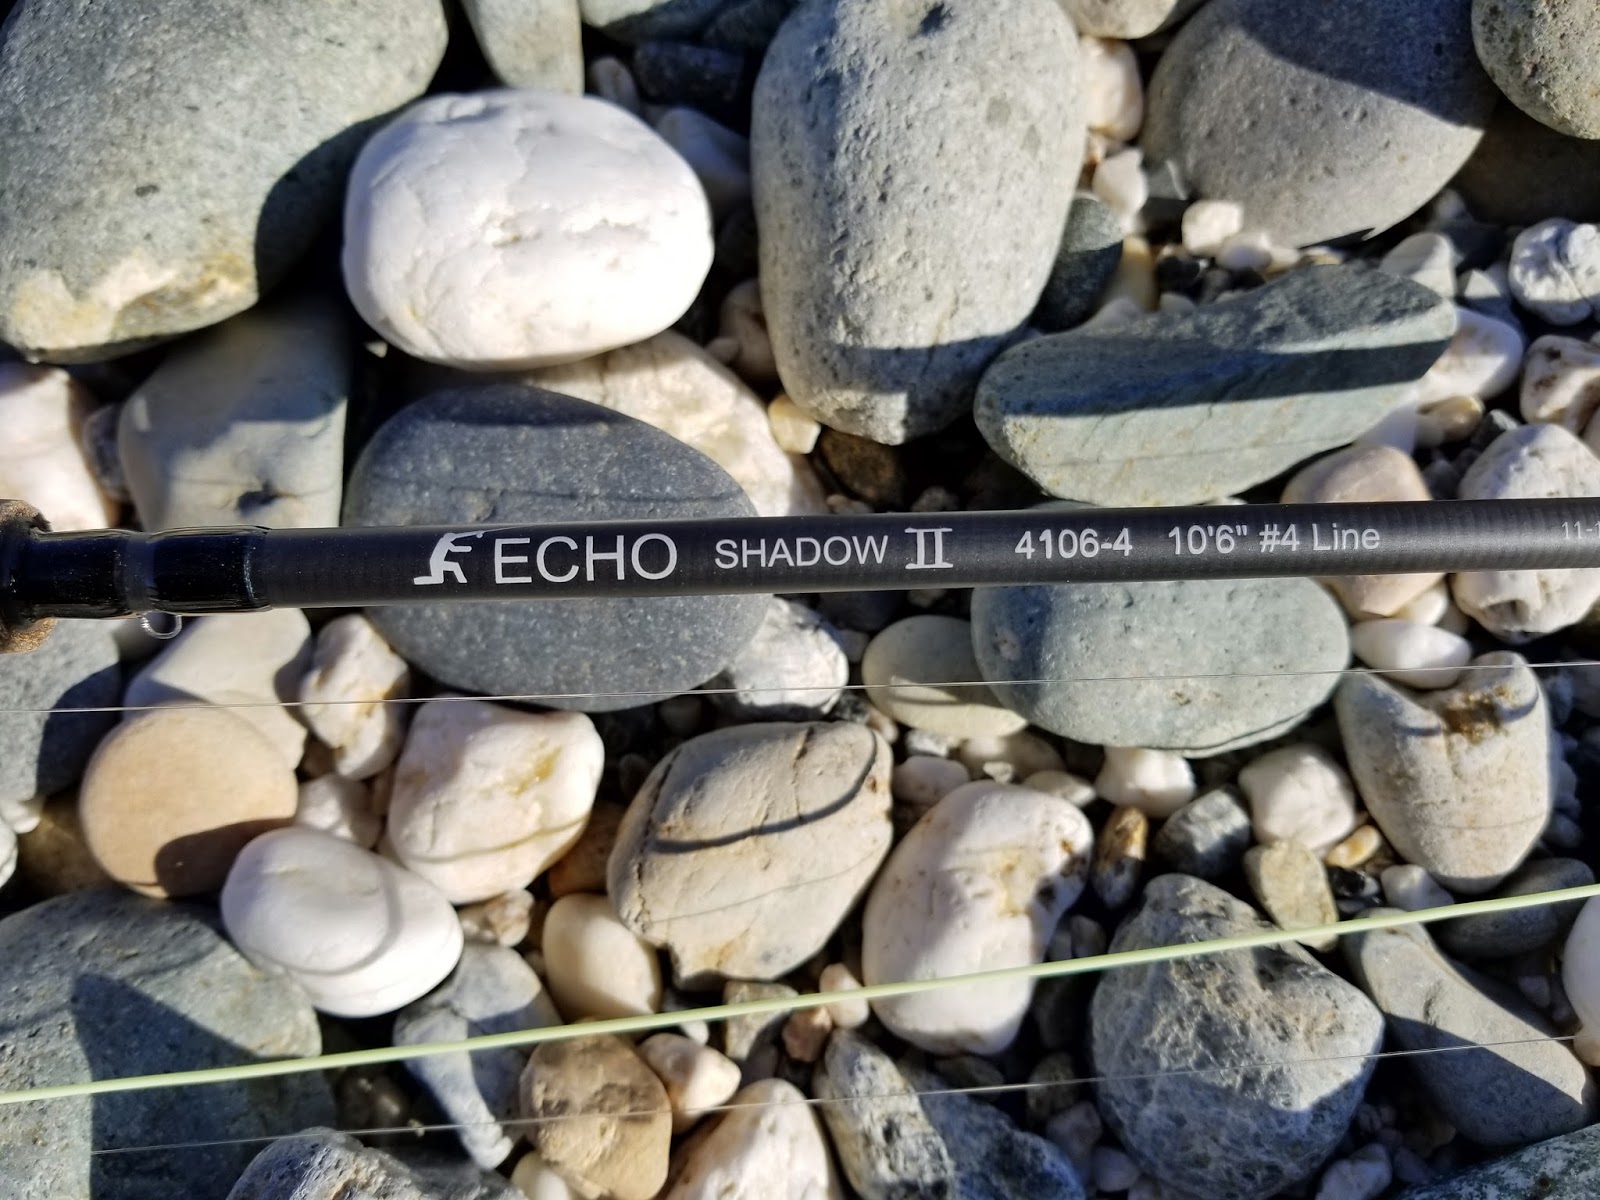 Jon Baiocchi Fly Fishing News: Echo Shadow II Rod Review